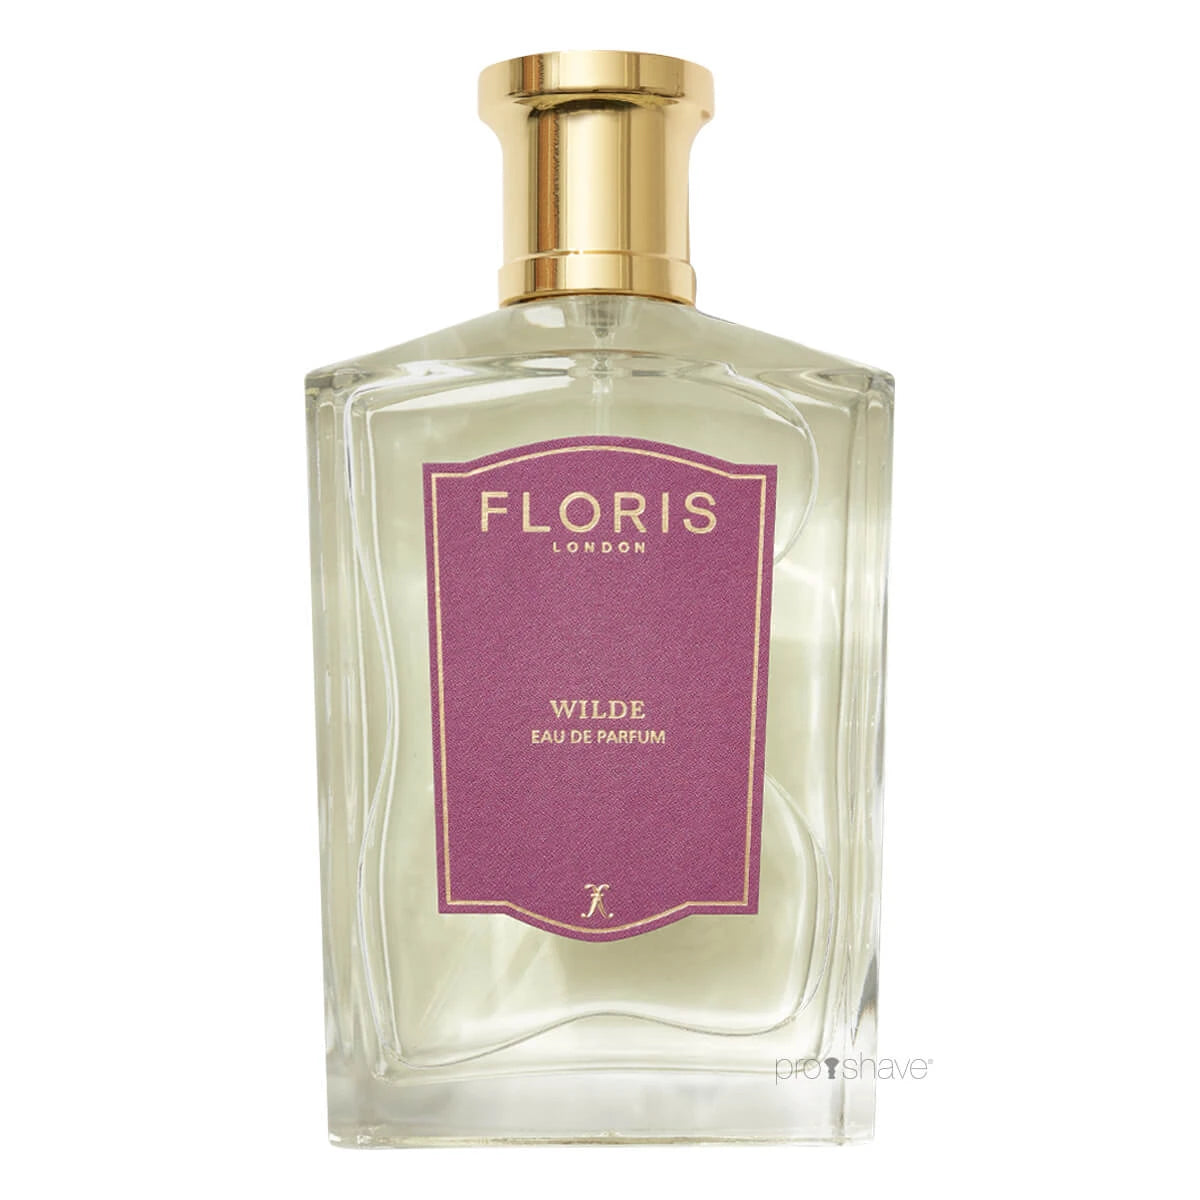 Floris Wilde, Eau de Parfum, 100 ml.